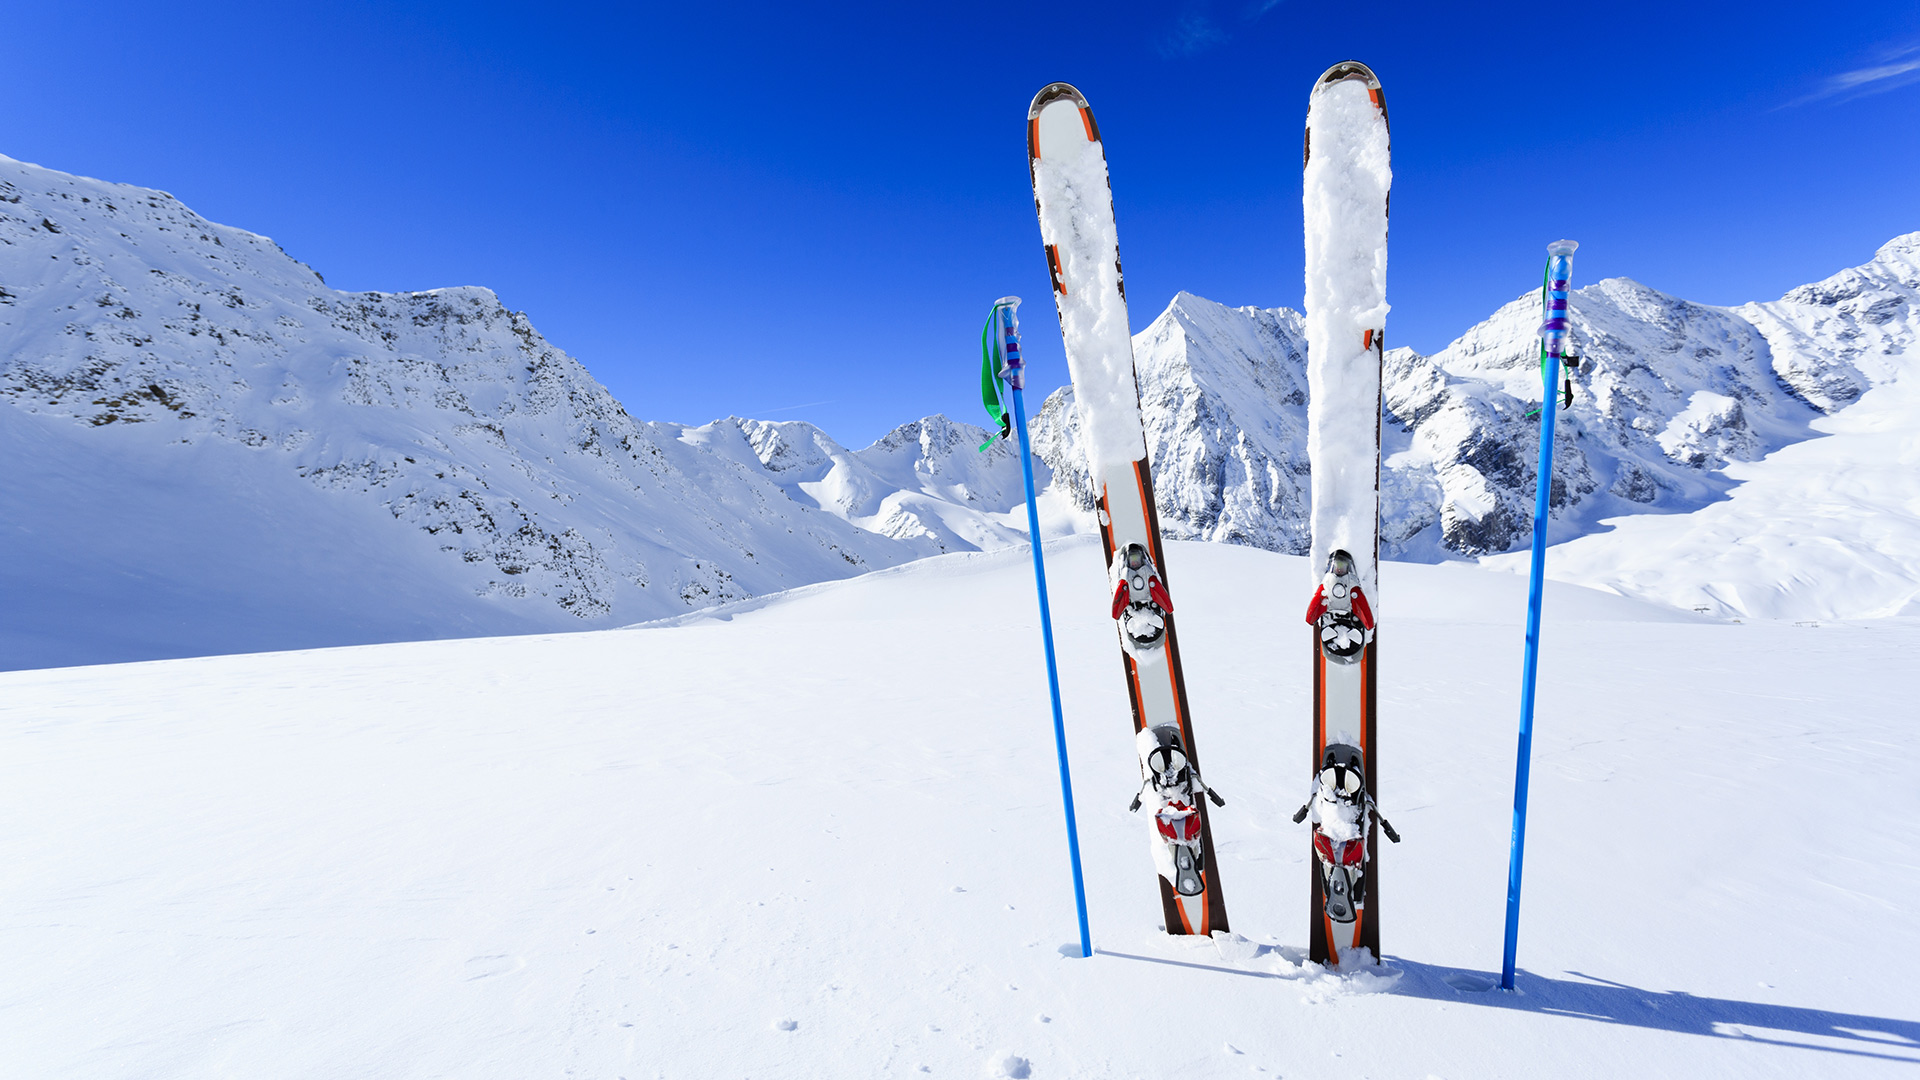 Ski Gear and Equipment